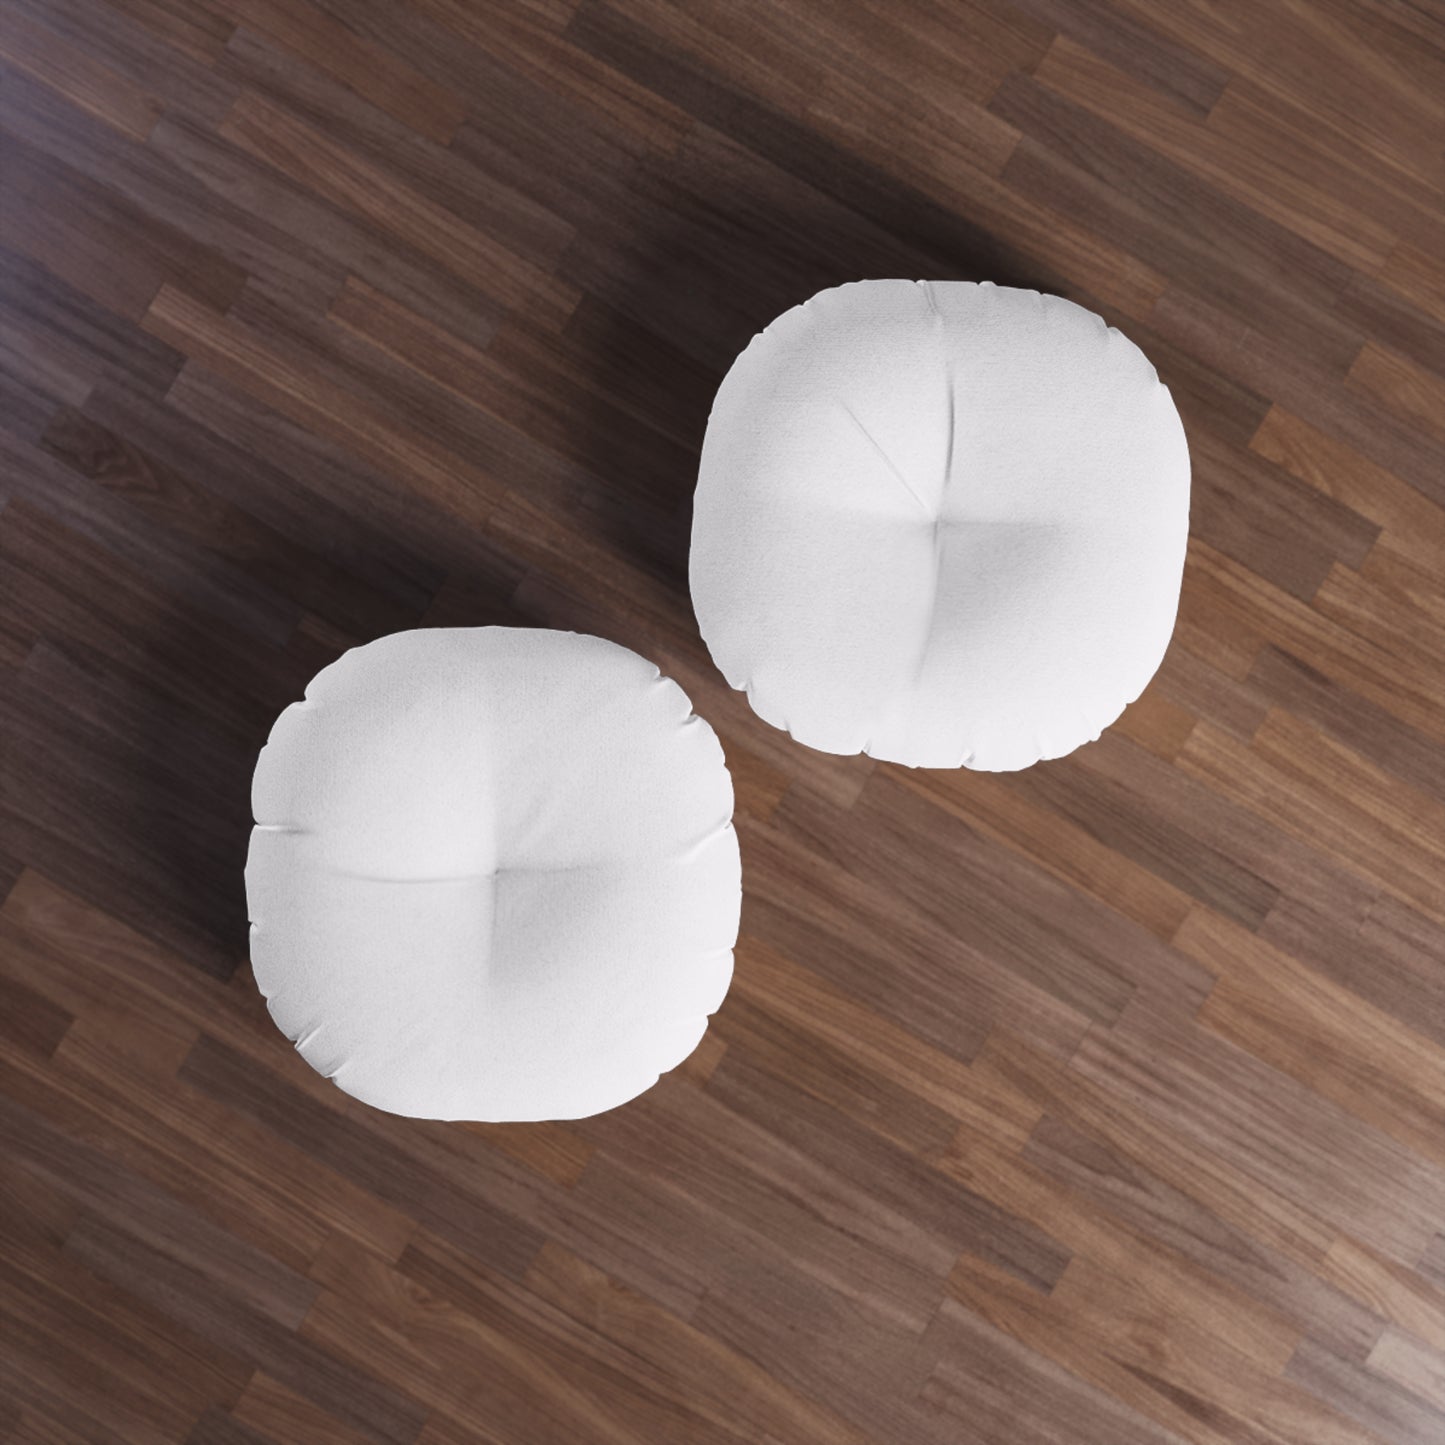 Round Tufted Floor Pillow - Moonstone White